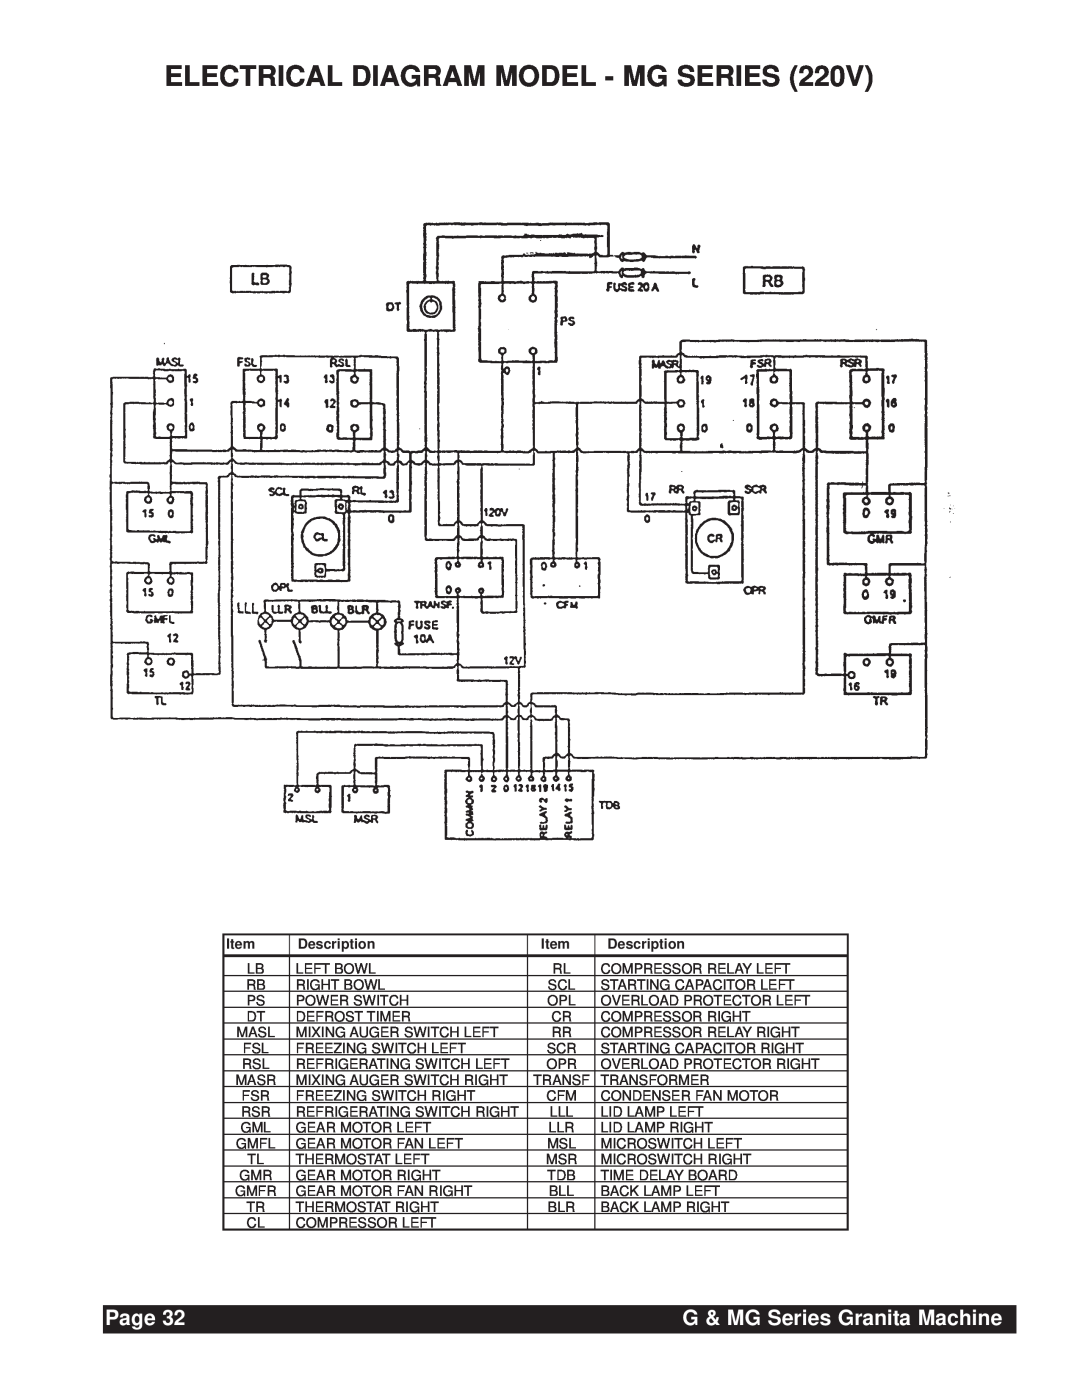 Grindmaster instruction manual Electrical Diagram Model - Mg Series, Page, G & MG Series Granita Machine, Description 